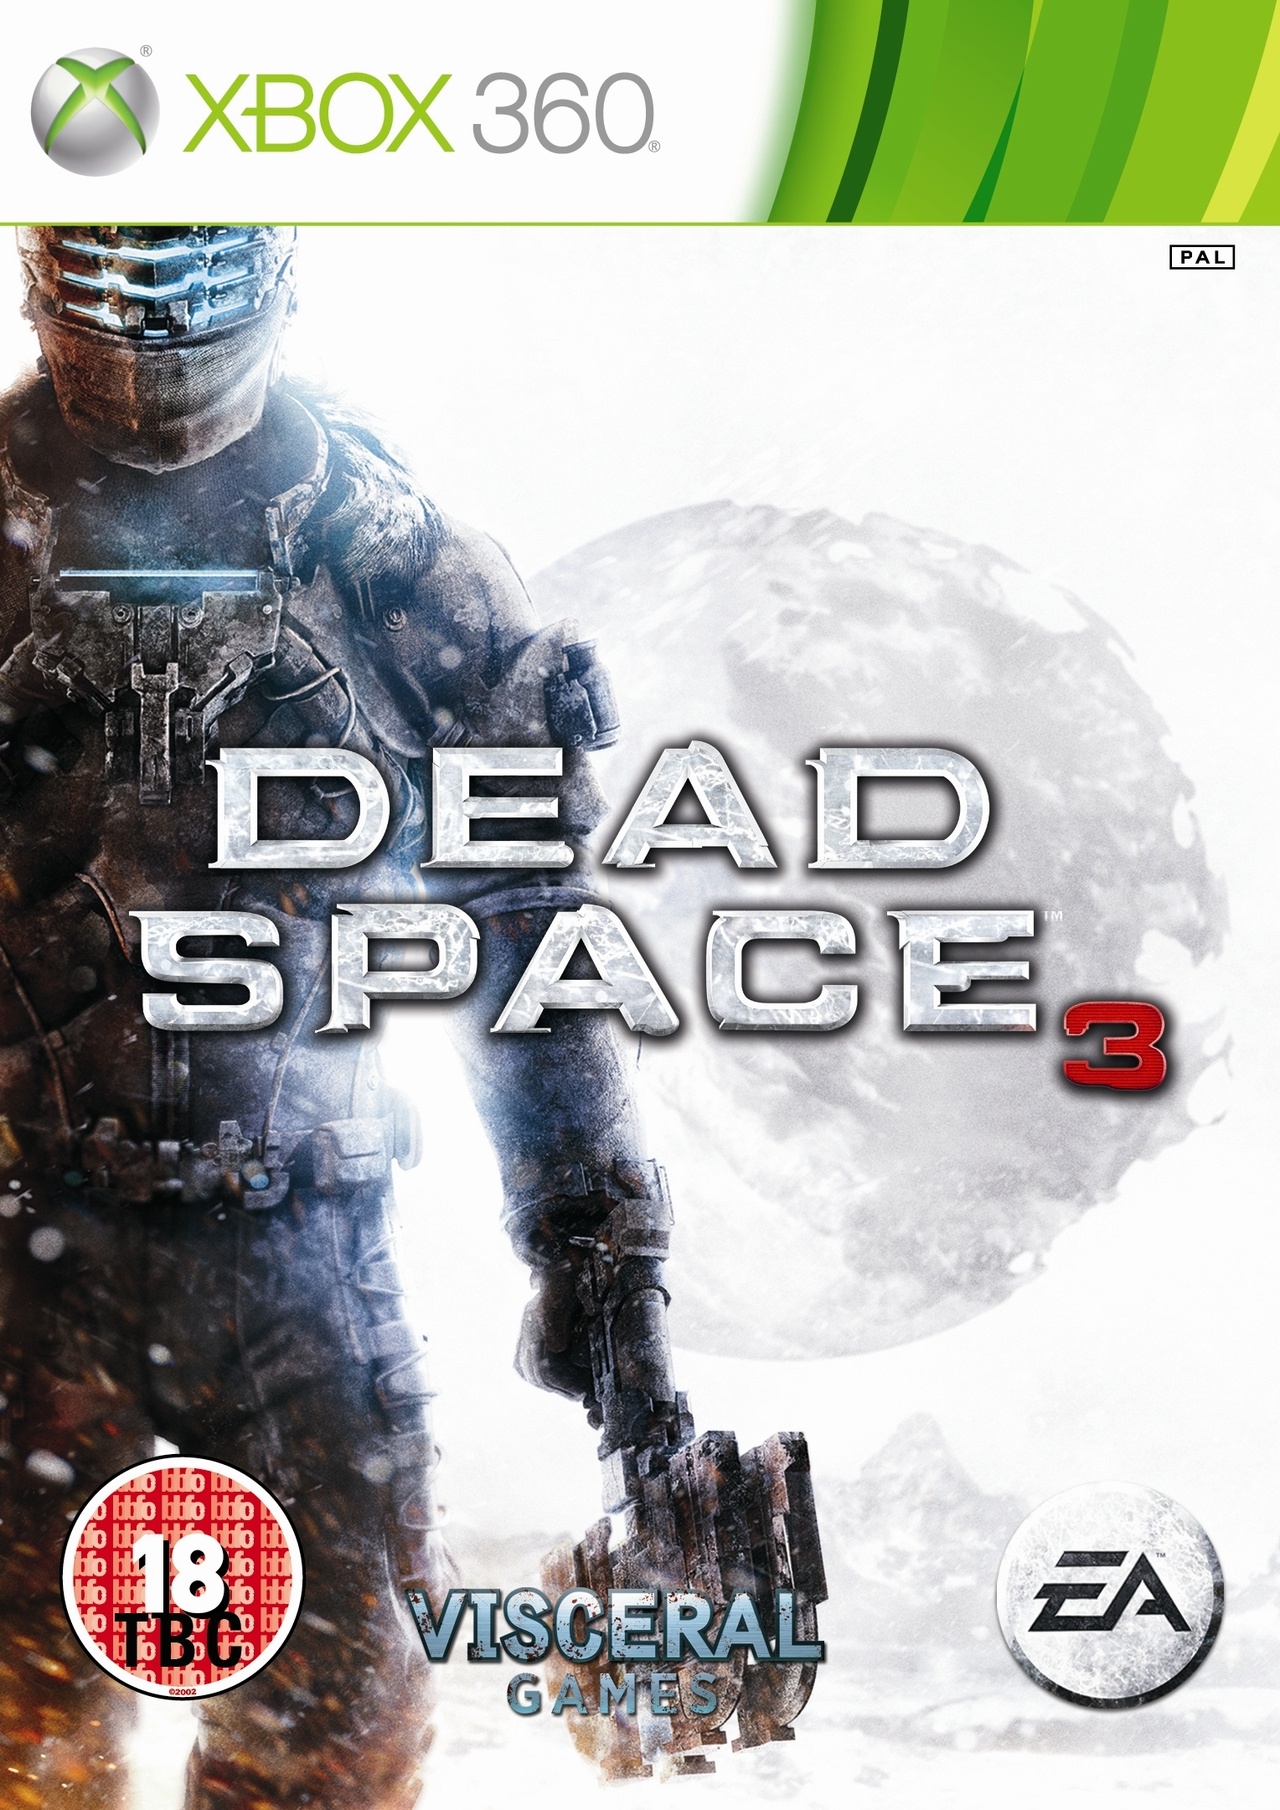 XBOX 360 - Dead Space 3